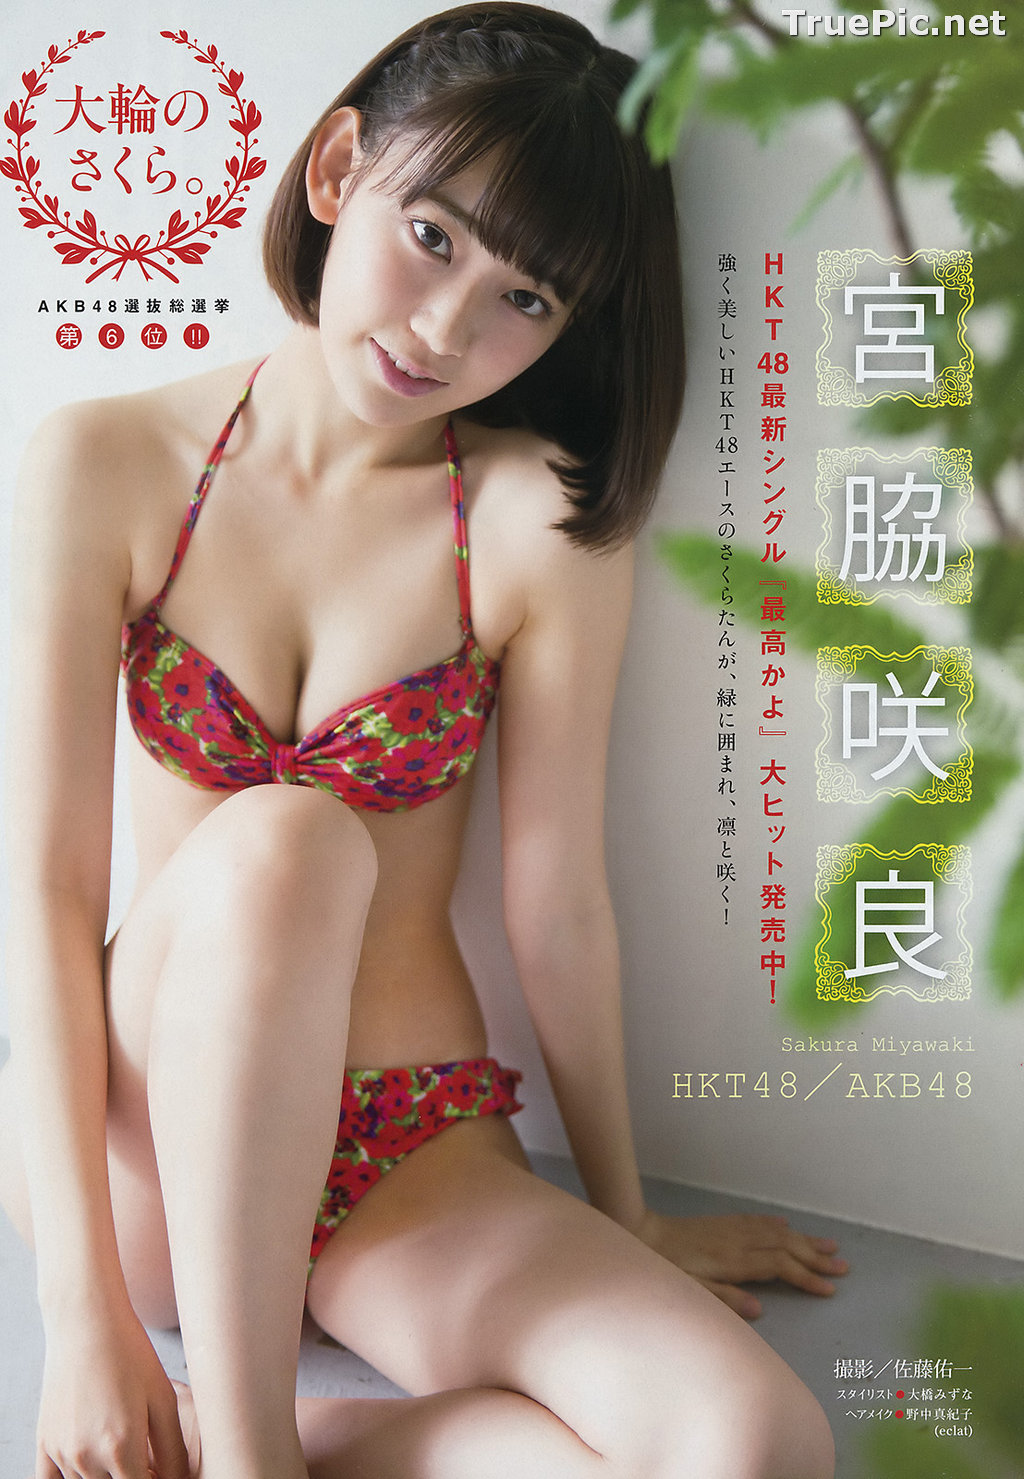 Image Japanese Singer and Actress - Sakura Miyawaki (宮脇咲良) - Sexy Picture Collection 2021 - TruePic.net - Picture-18